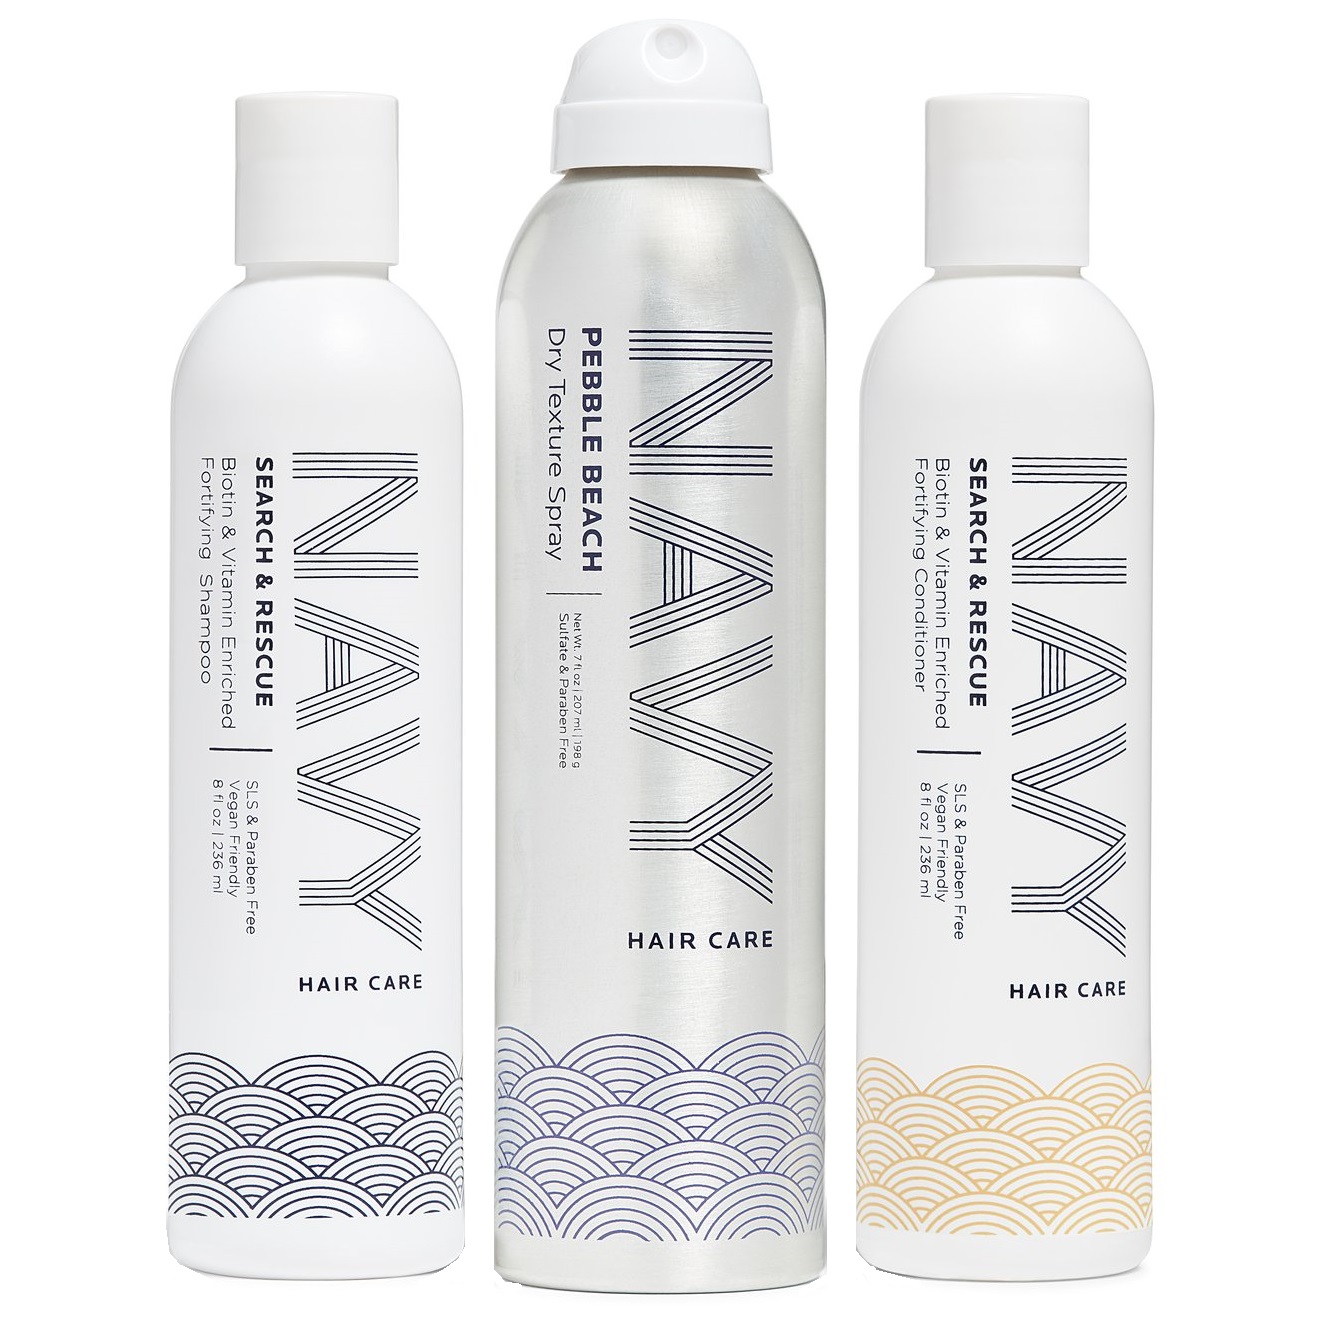 NAVY Pebble Beach Dry Texture Spray Hair Care 7 Oz for sale online